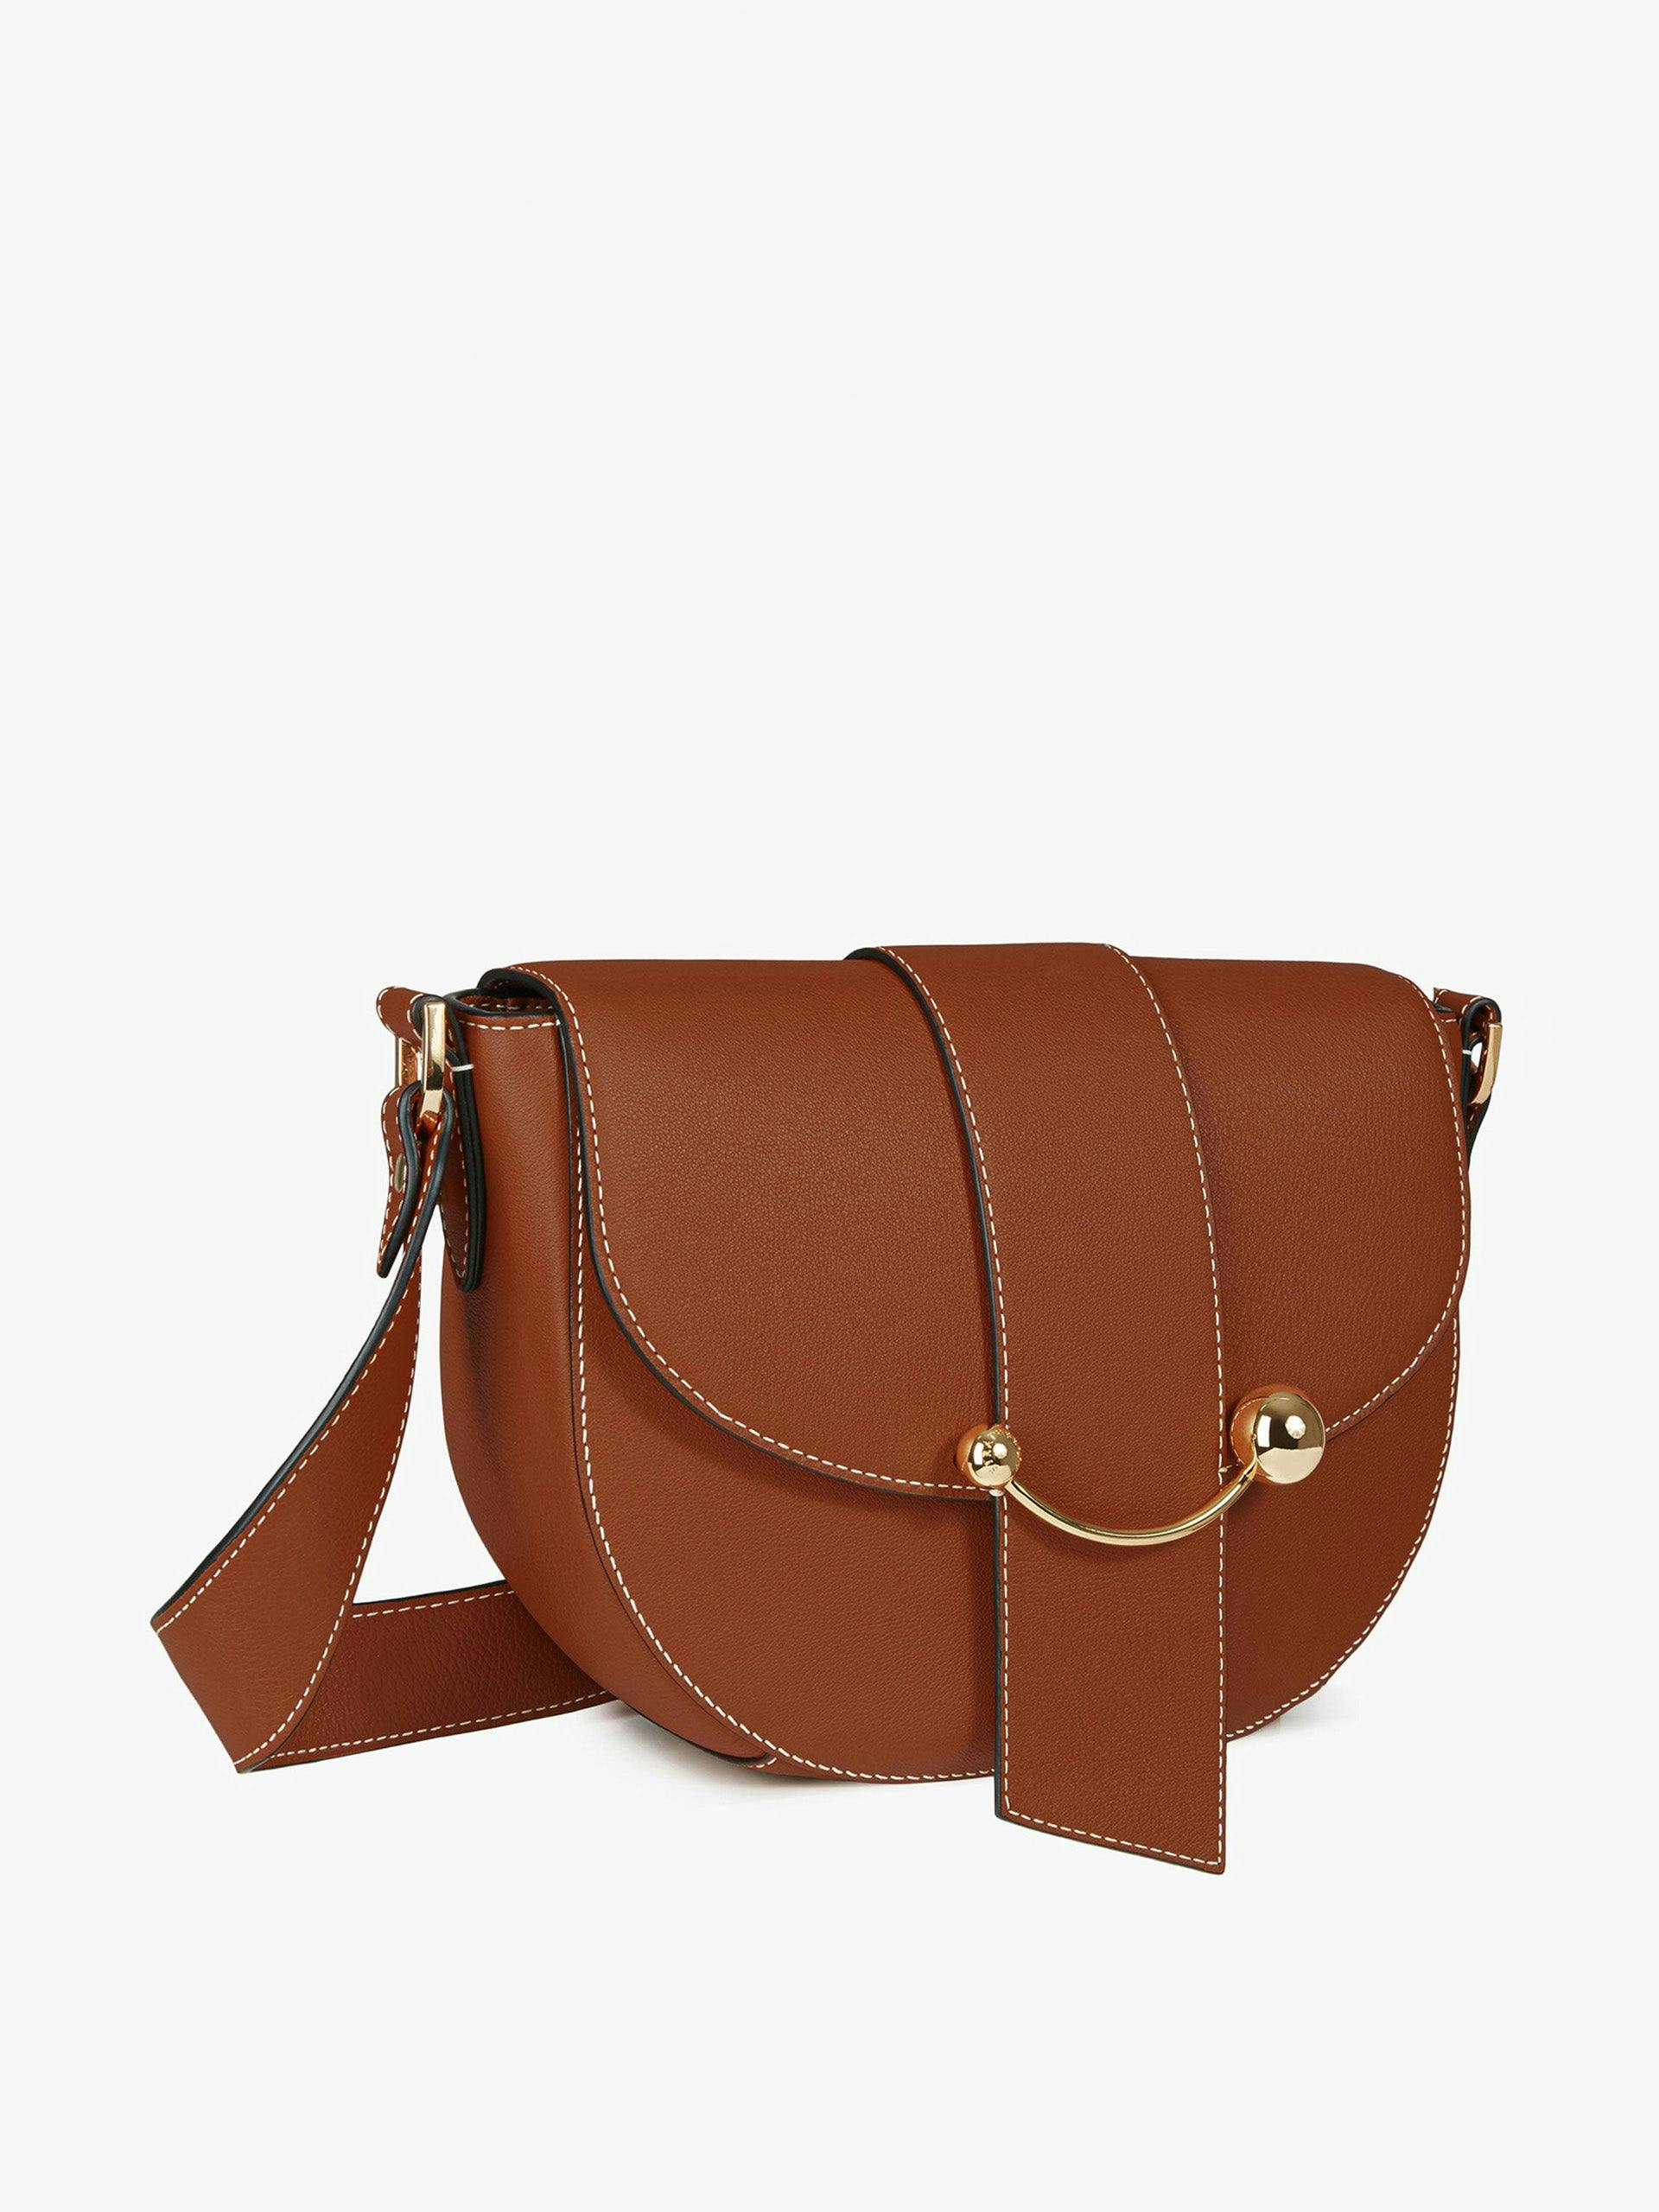 Chestnut and vanilla stitch Crescent satchel bag